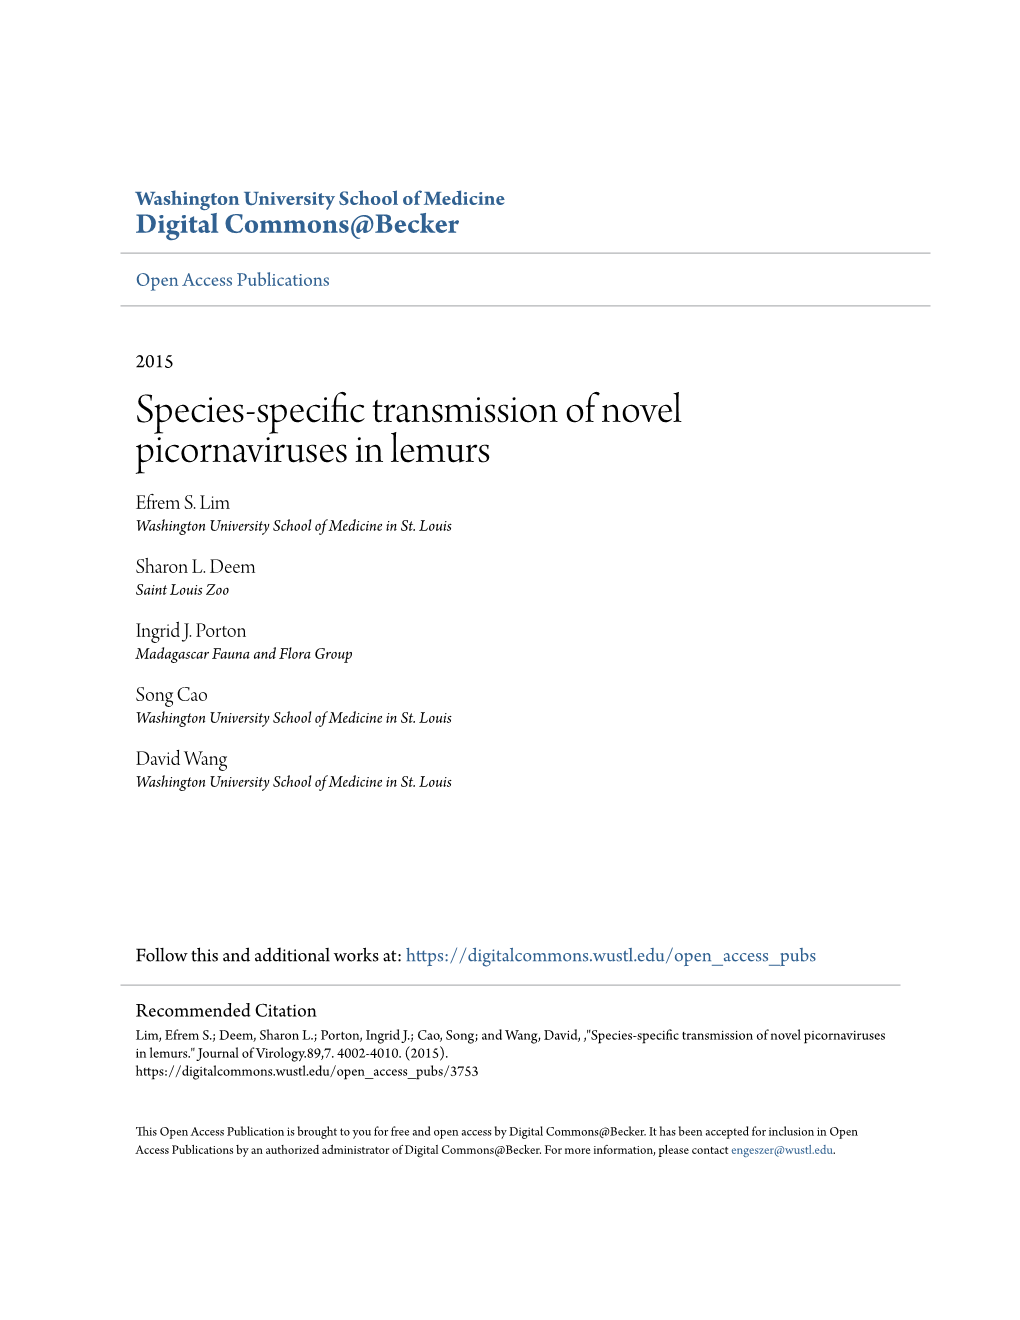 Species-Specific Transmission of Novel Picornaviruses in Lemurs Efrem S